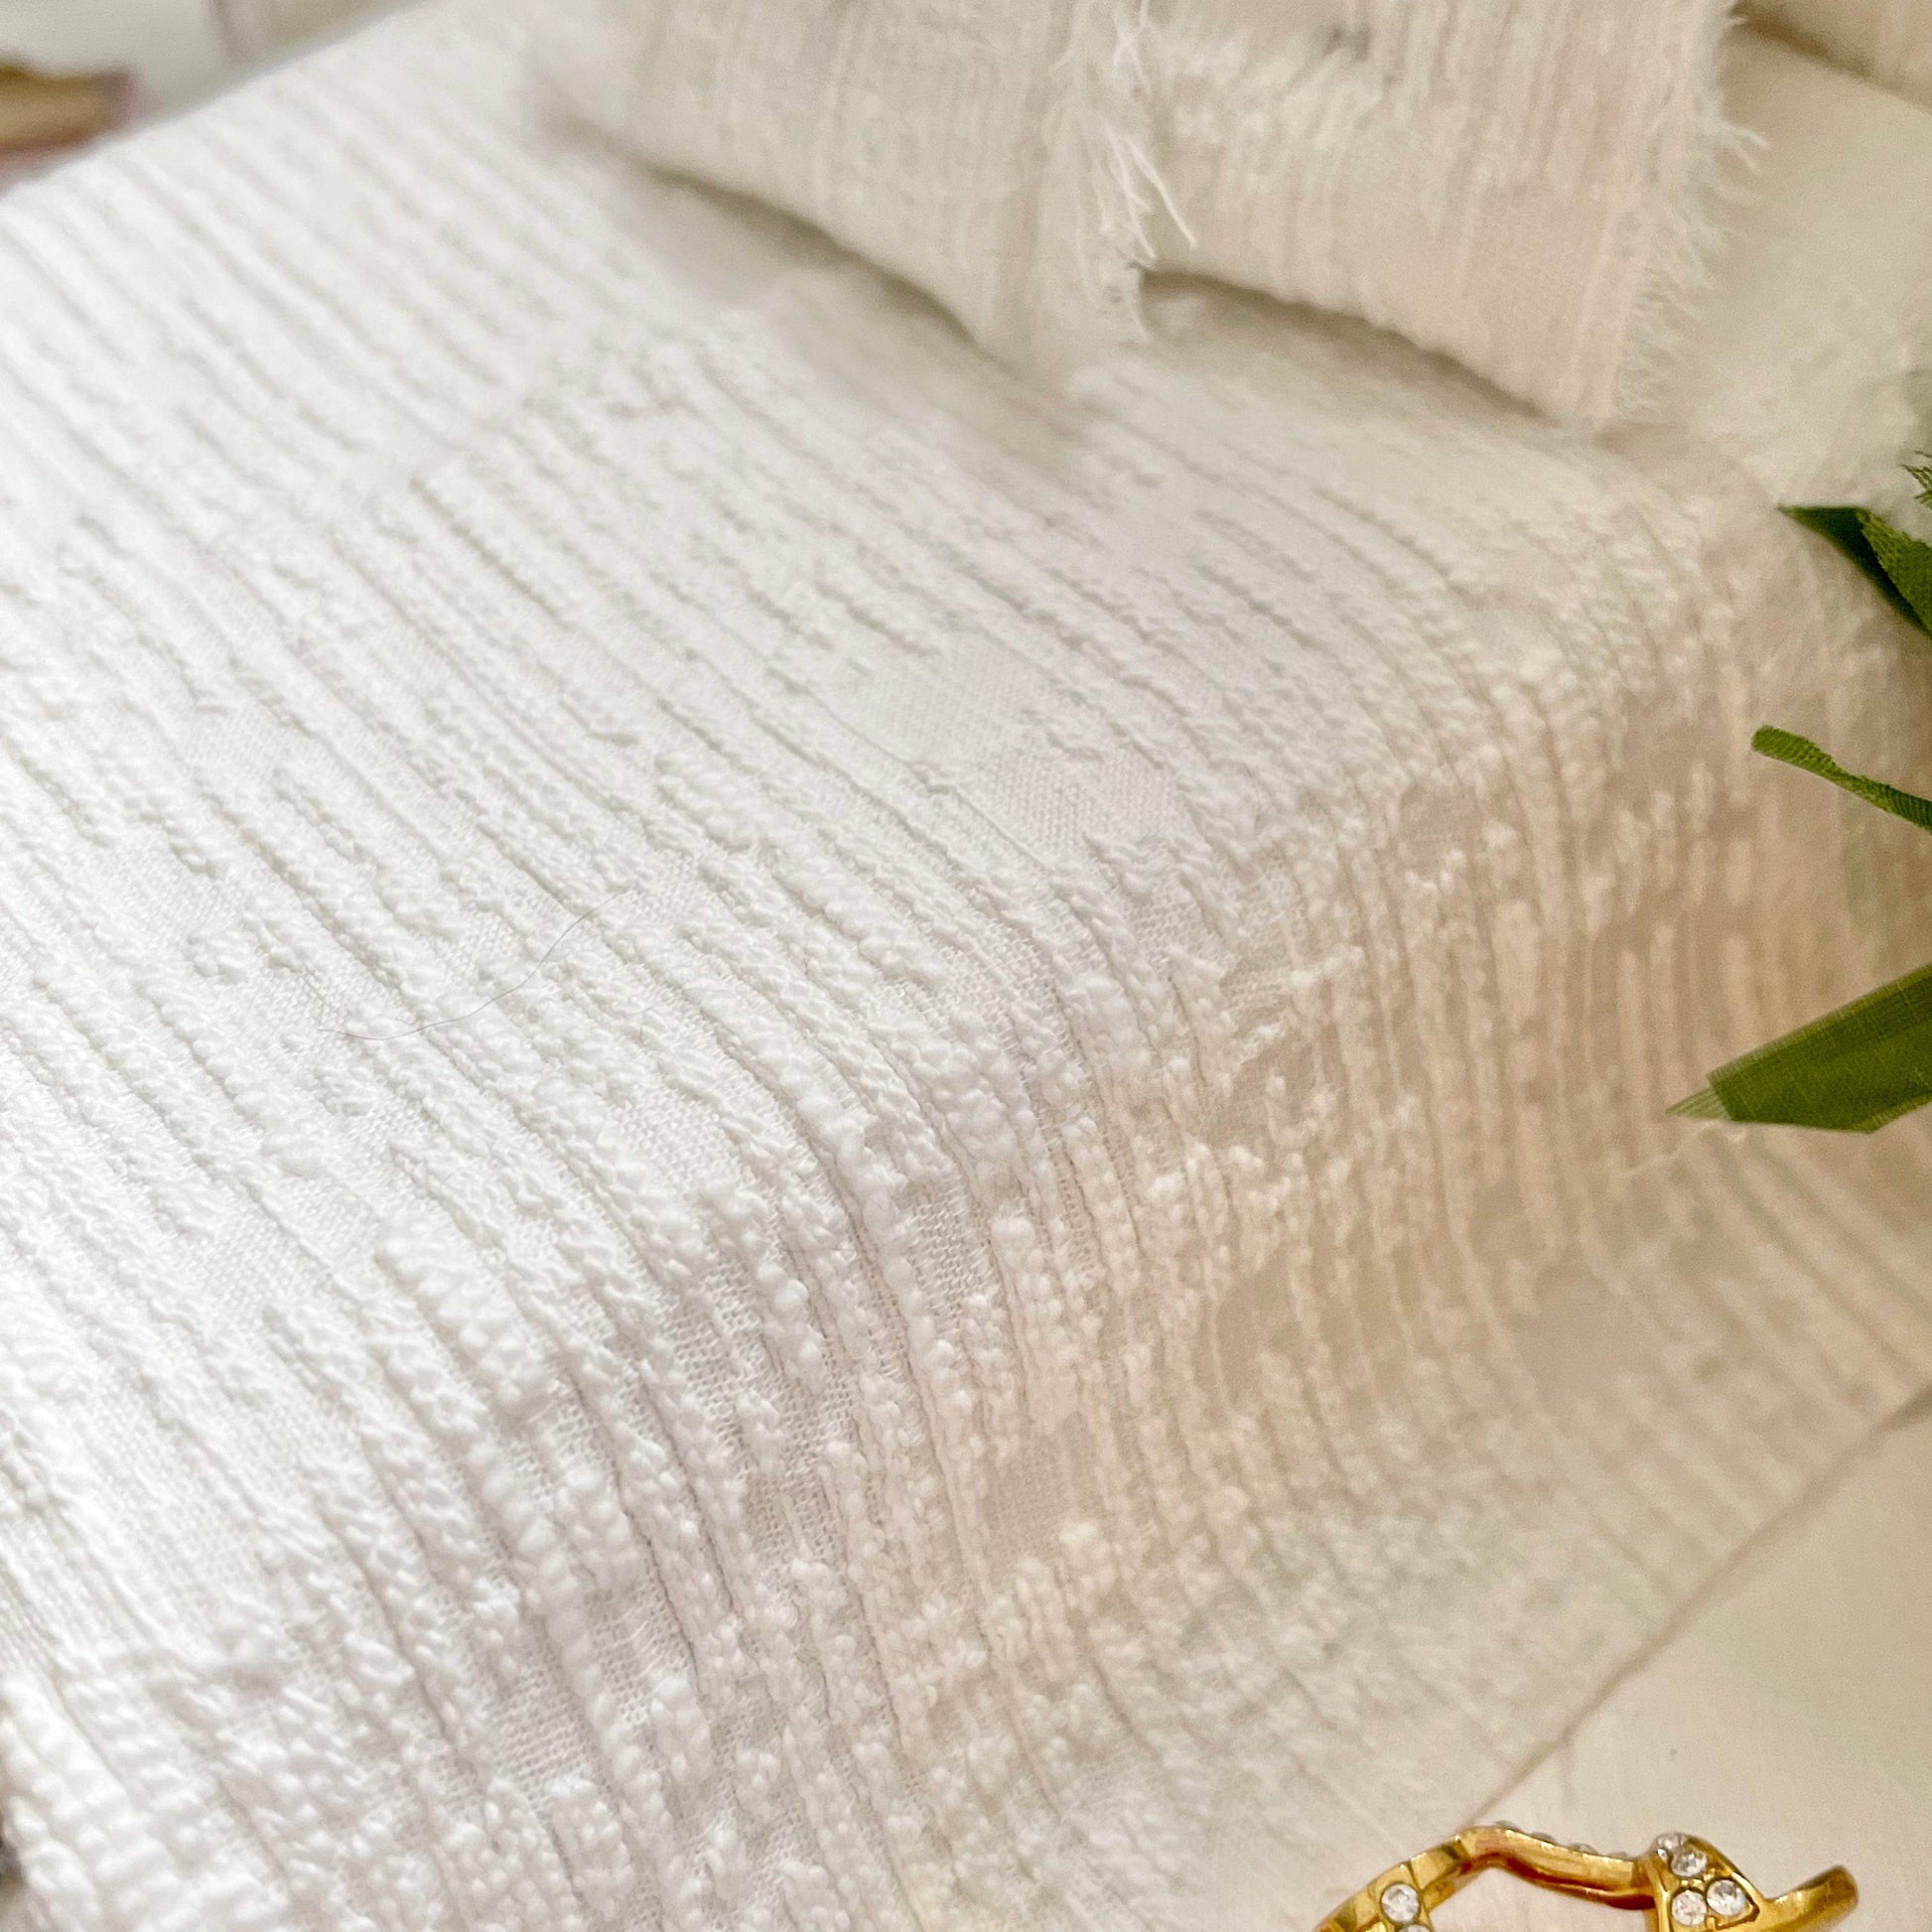 Chantallena White Bed Linens Boundless White | White Textured Cotton Bedding Set with Ercu Blanket-1:12 Scale | Charis